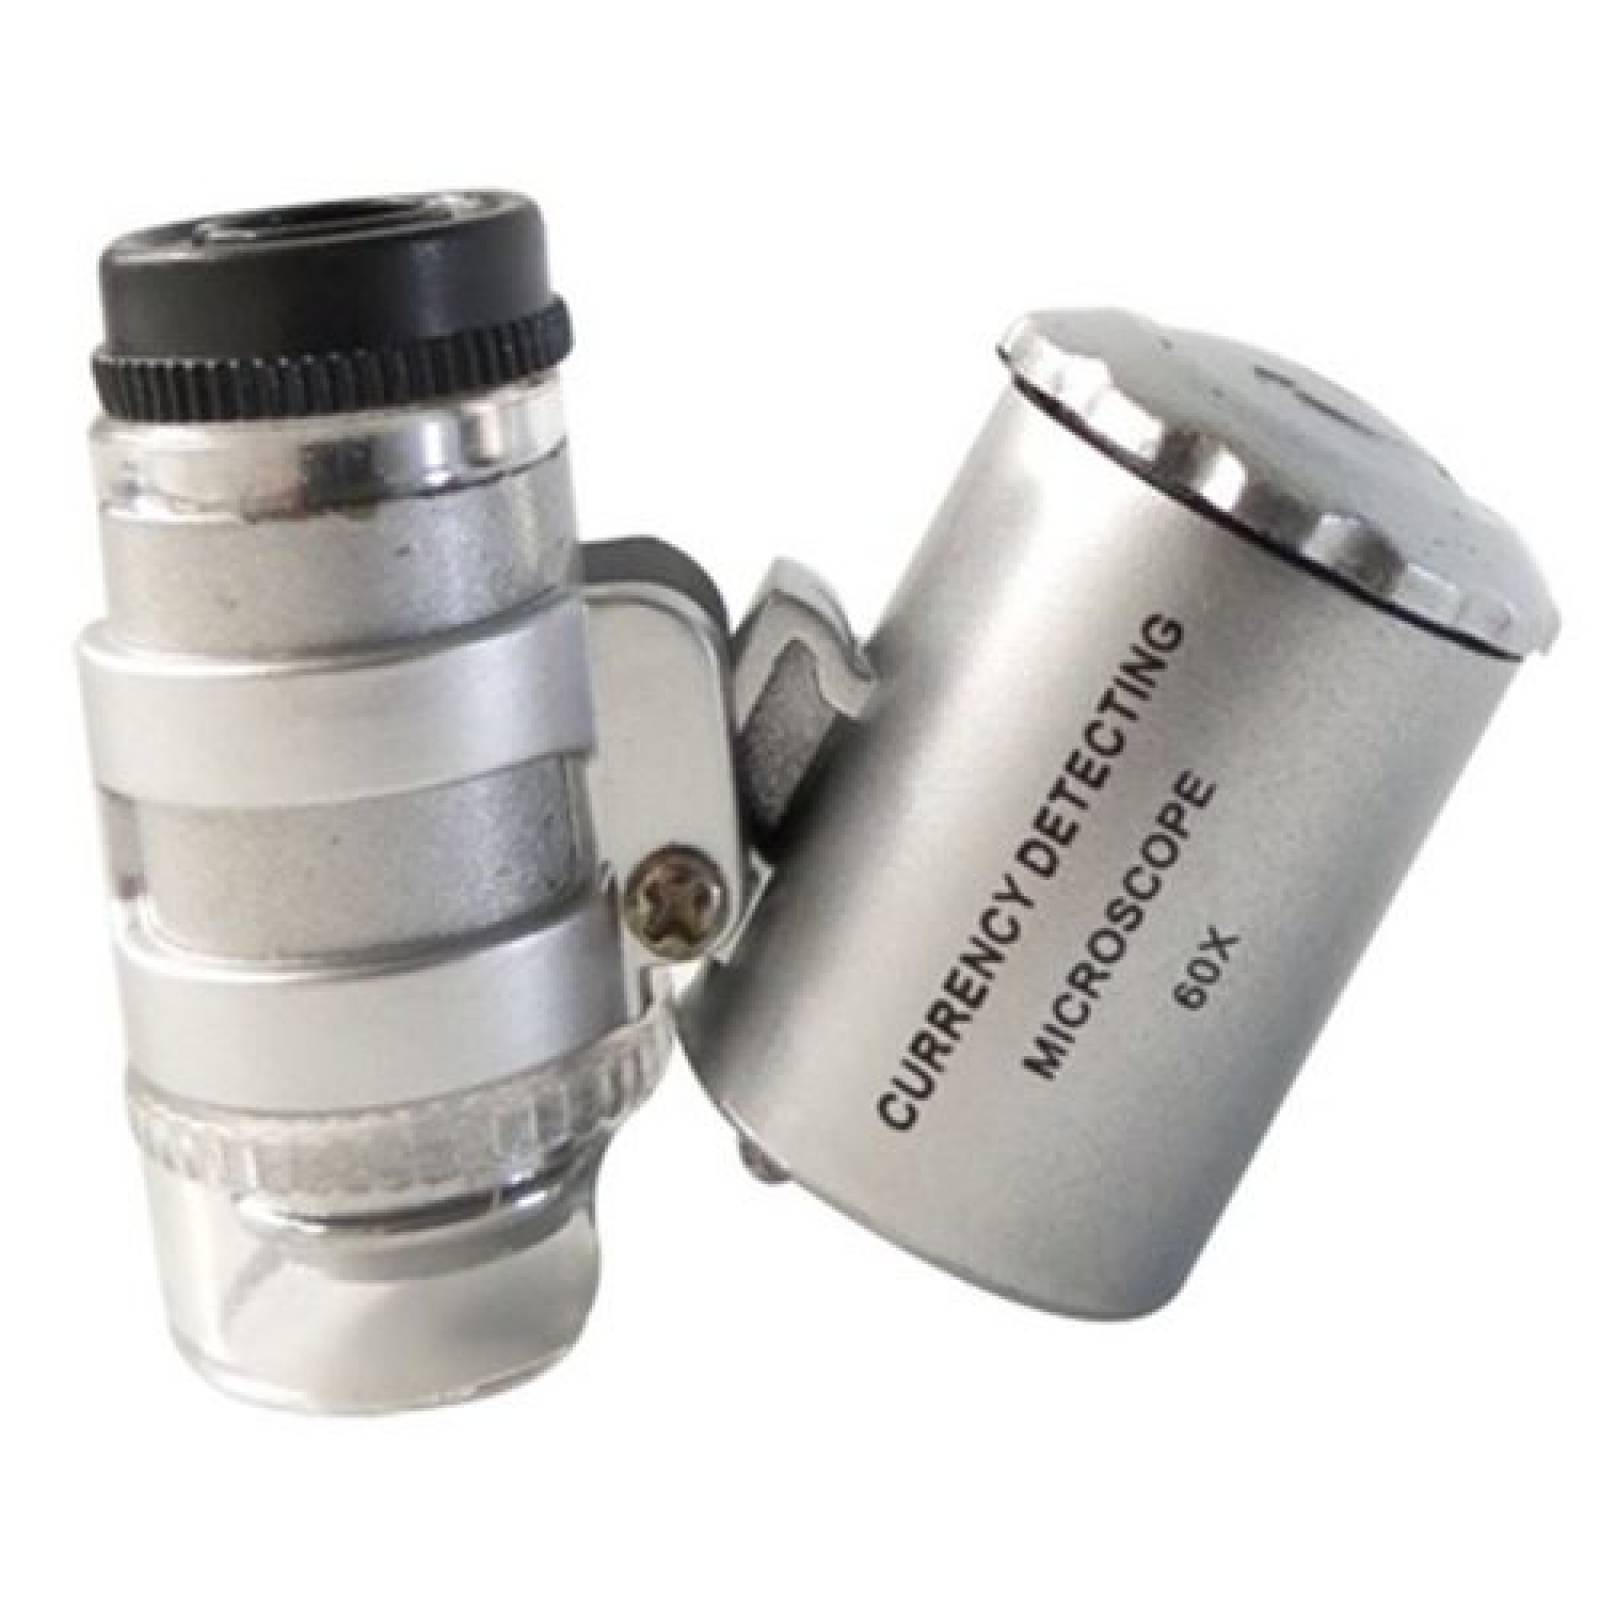 Microscopio Mini Aumento Ajustable Herramienta 60X 264308